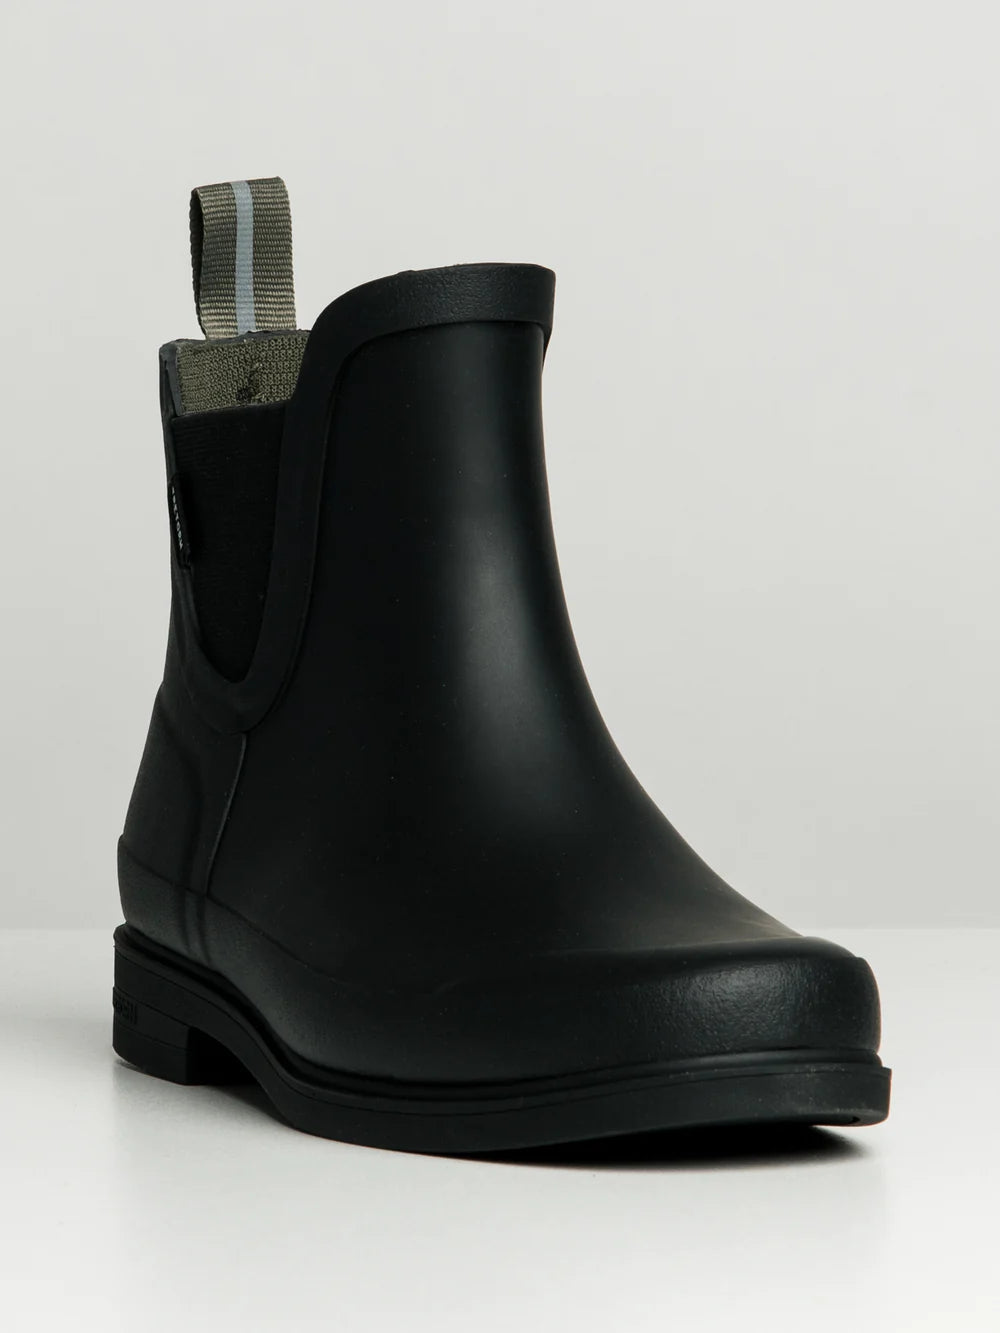 shoes - TRETORN - Eva H2O Proof Rubber Boot - PLENTY